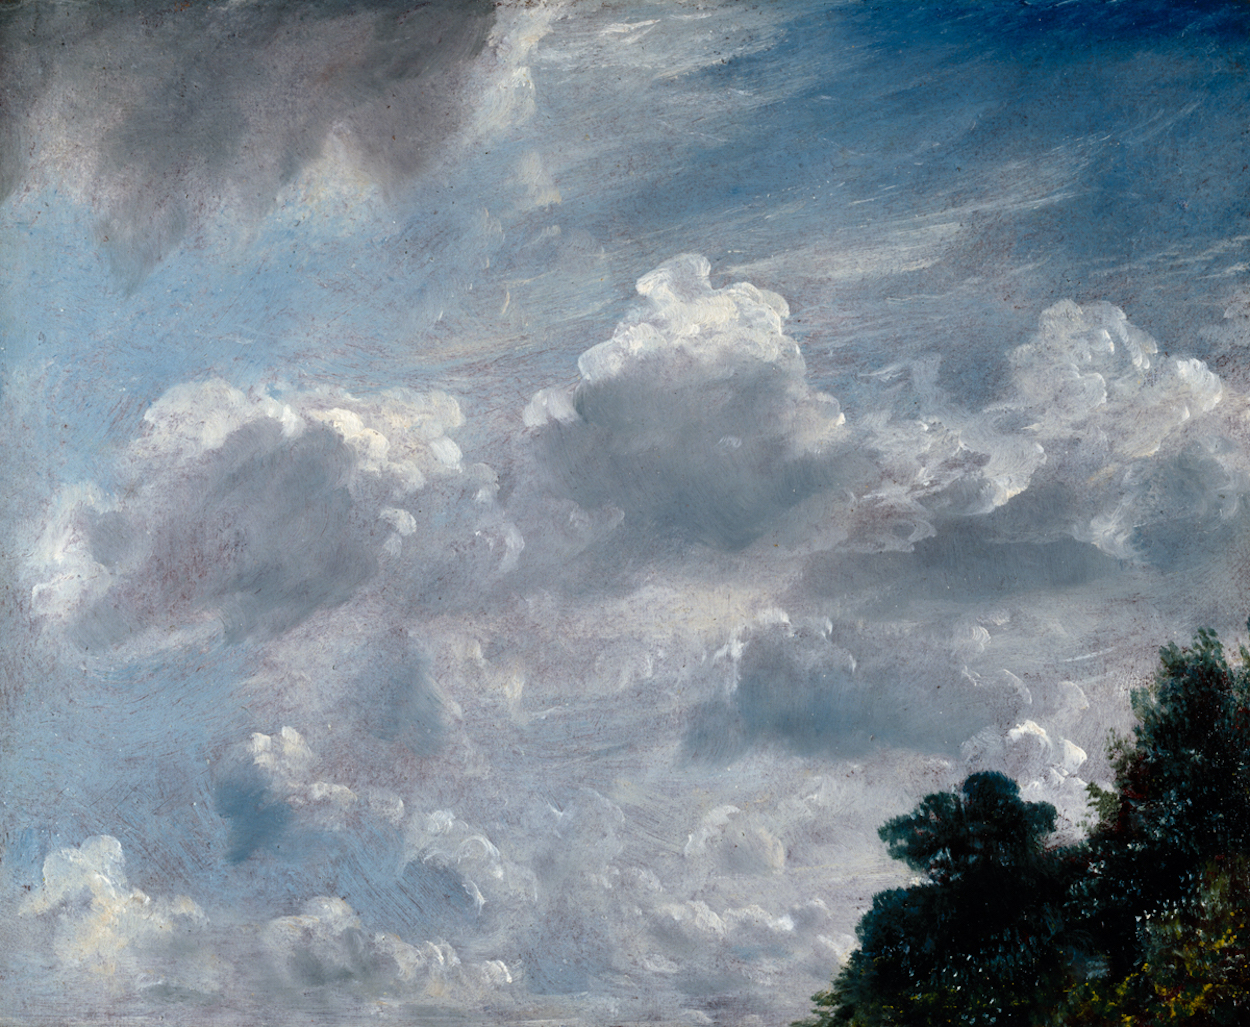 Bulut Çalışması, Hampstead, Sağdaki Ağaç (orig. "Cloud Study, Hampstead, Tree at Right") by John Constable - 1821 - 24,1 x 29,9 cm 